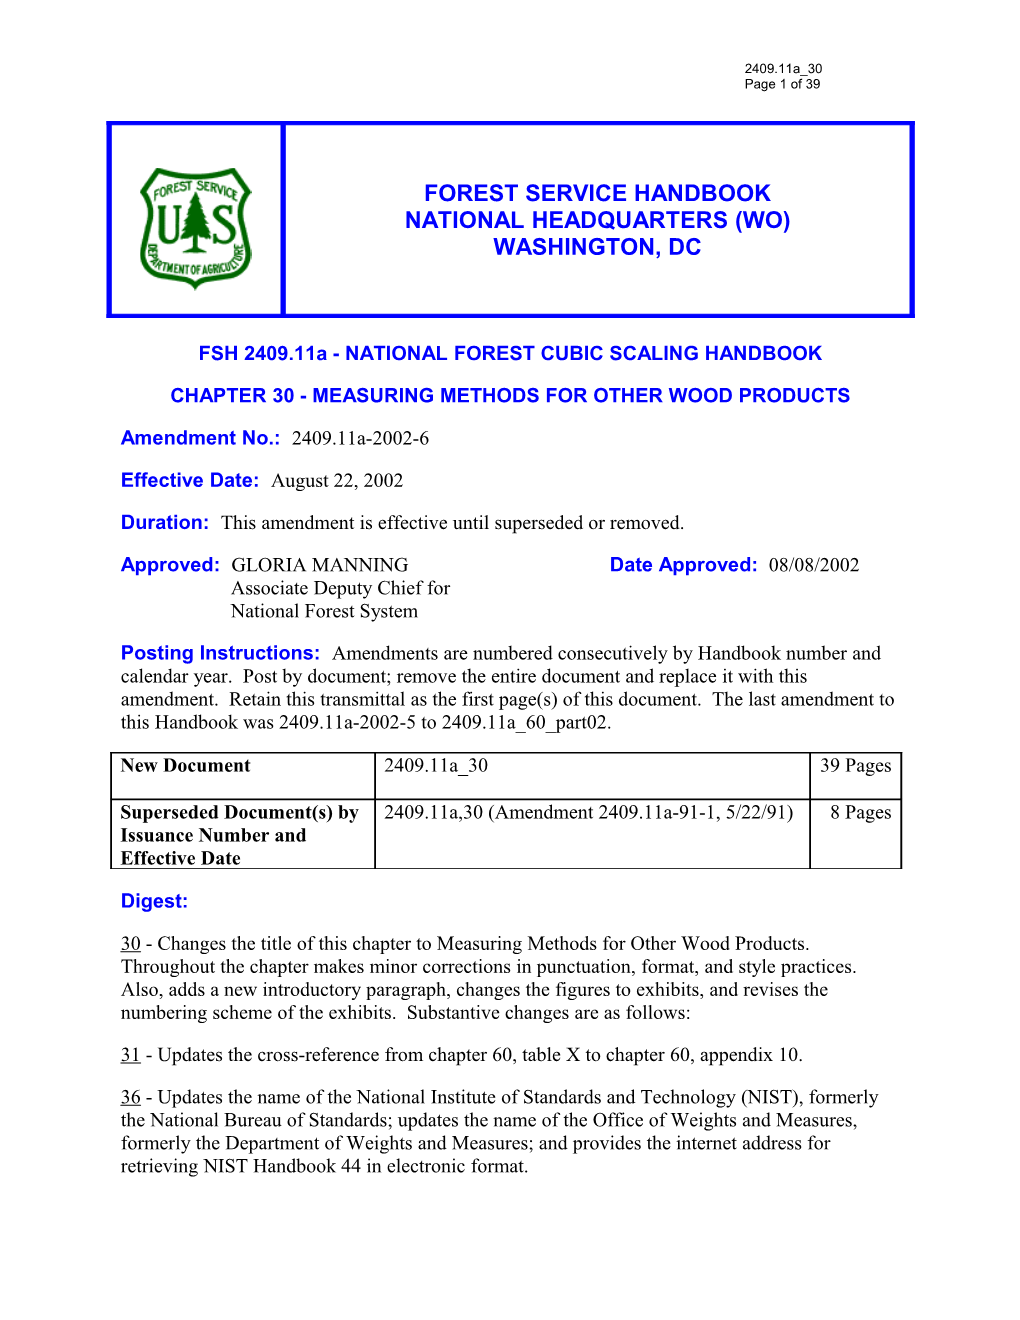 FSH 2409.11A - NATIONAL FOREST CUBIC SCALING HANDBOOK